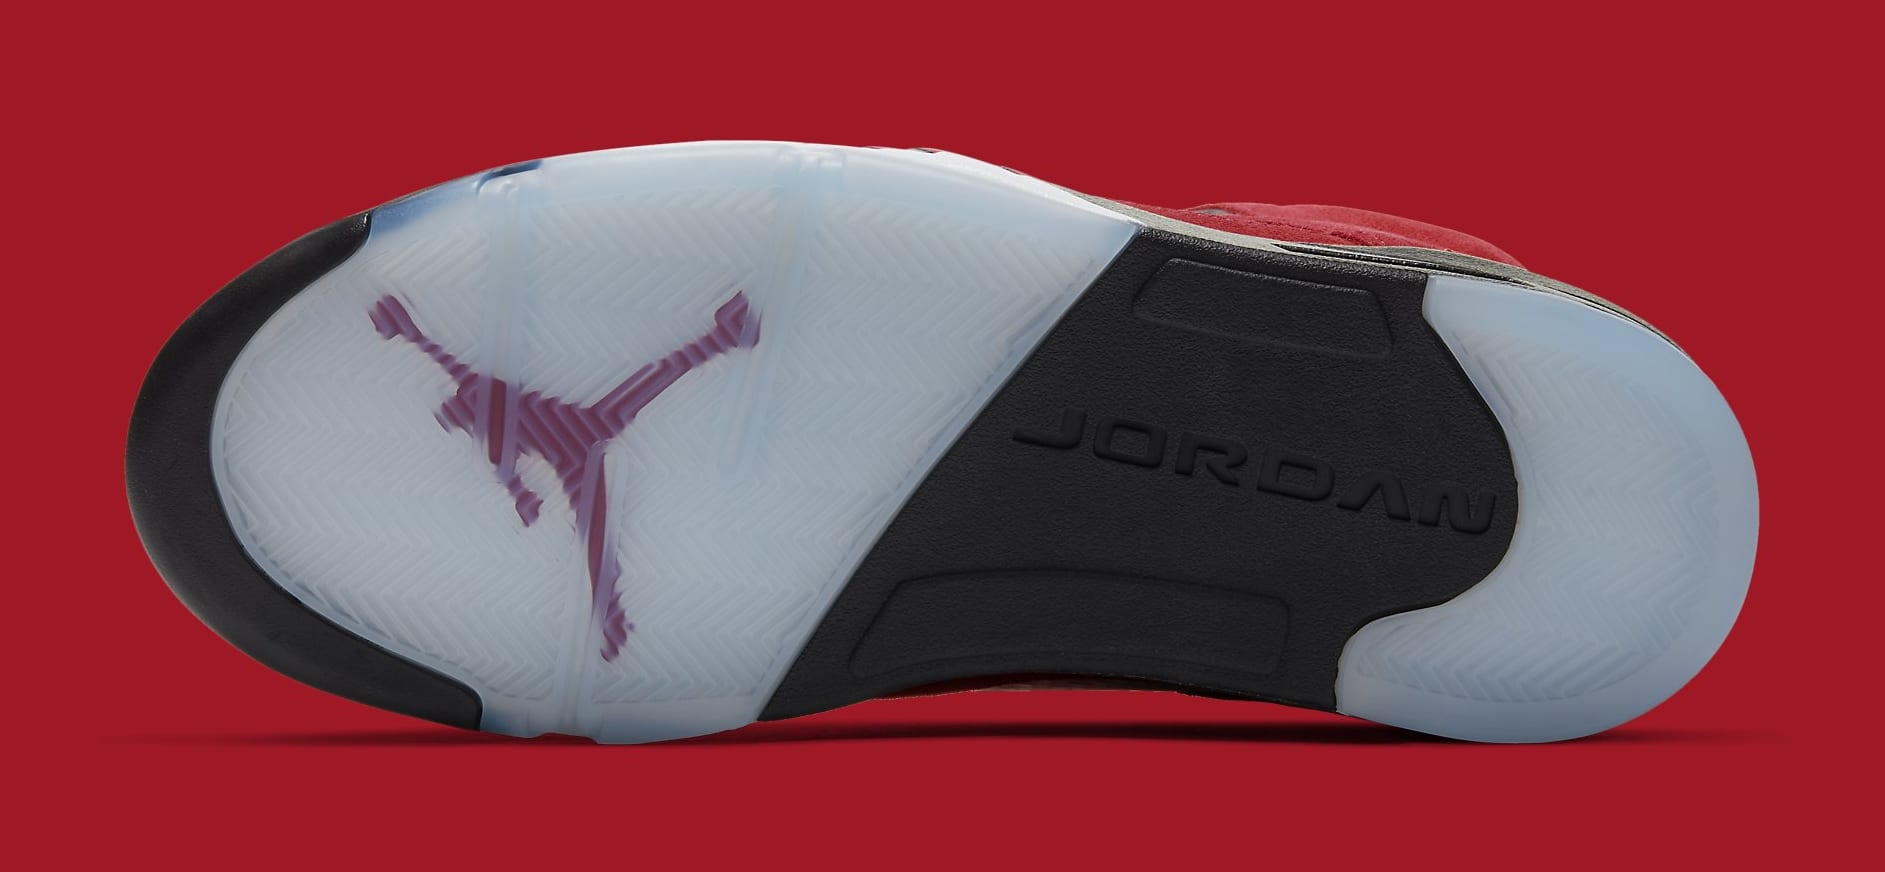 Air Jordan 5 Retro 'Raging Bull' 2021 DD0587-600 Outsole